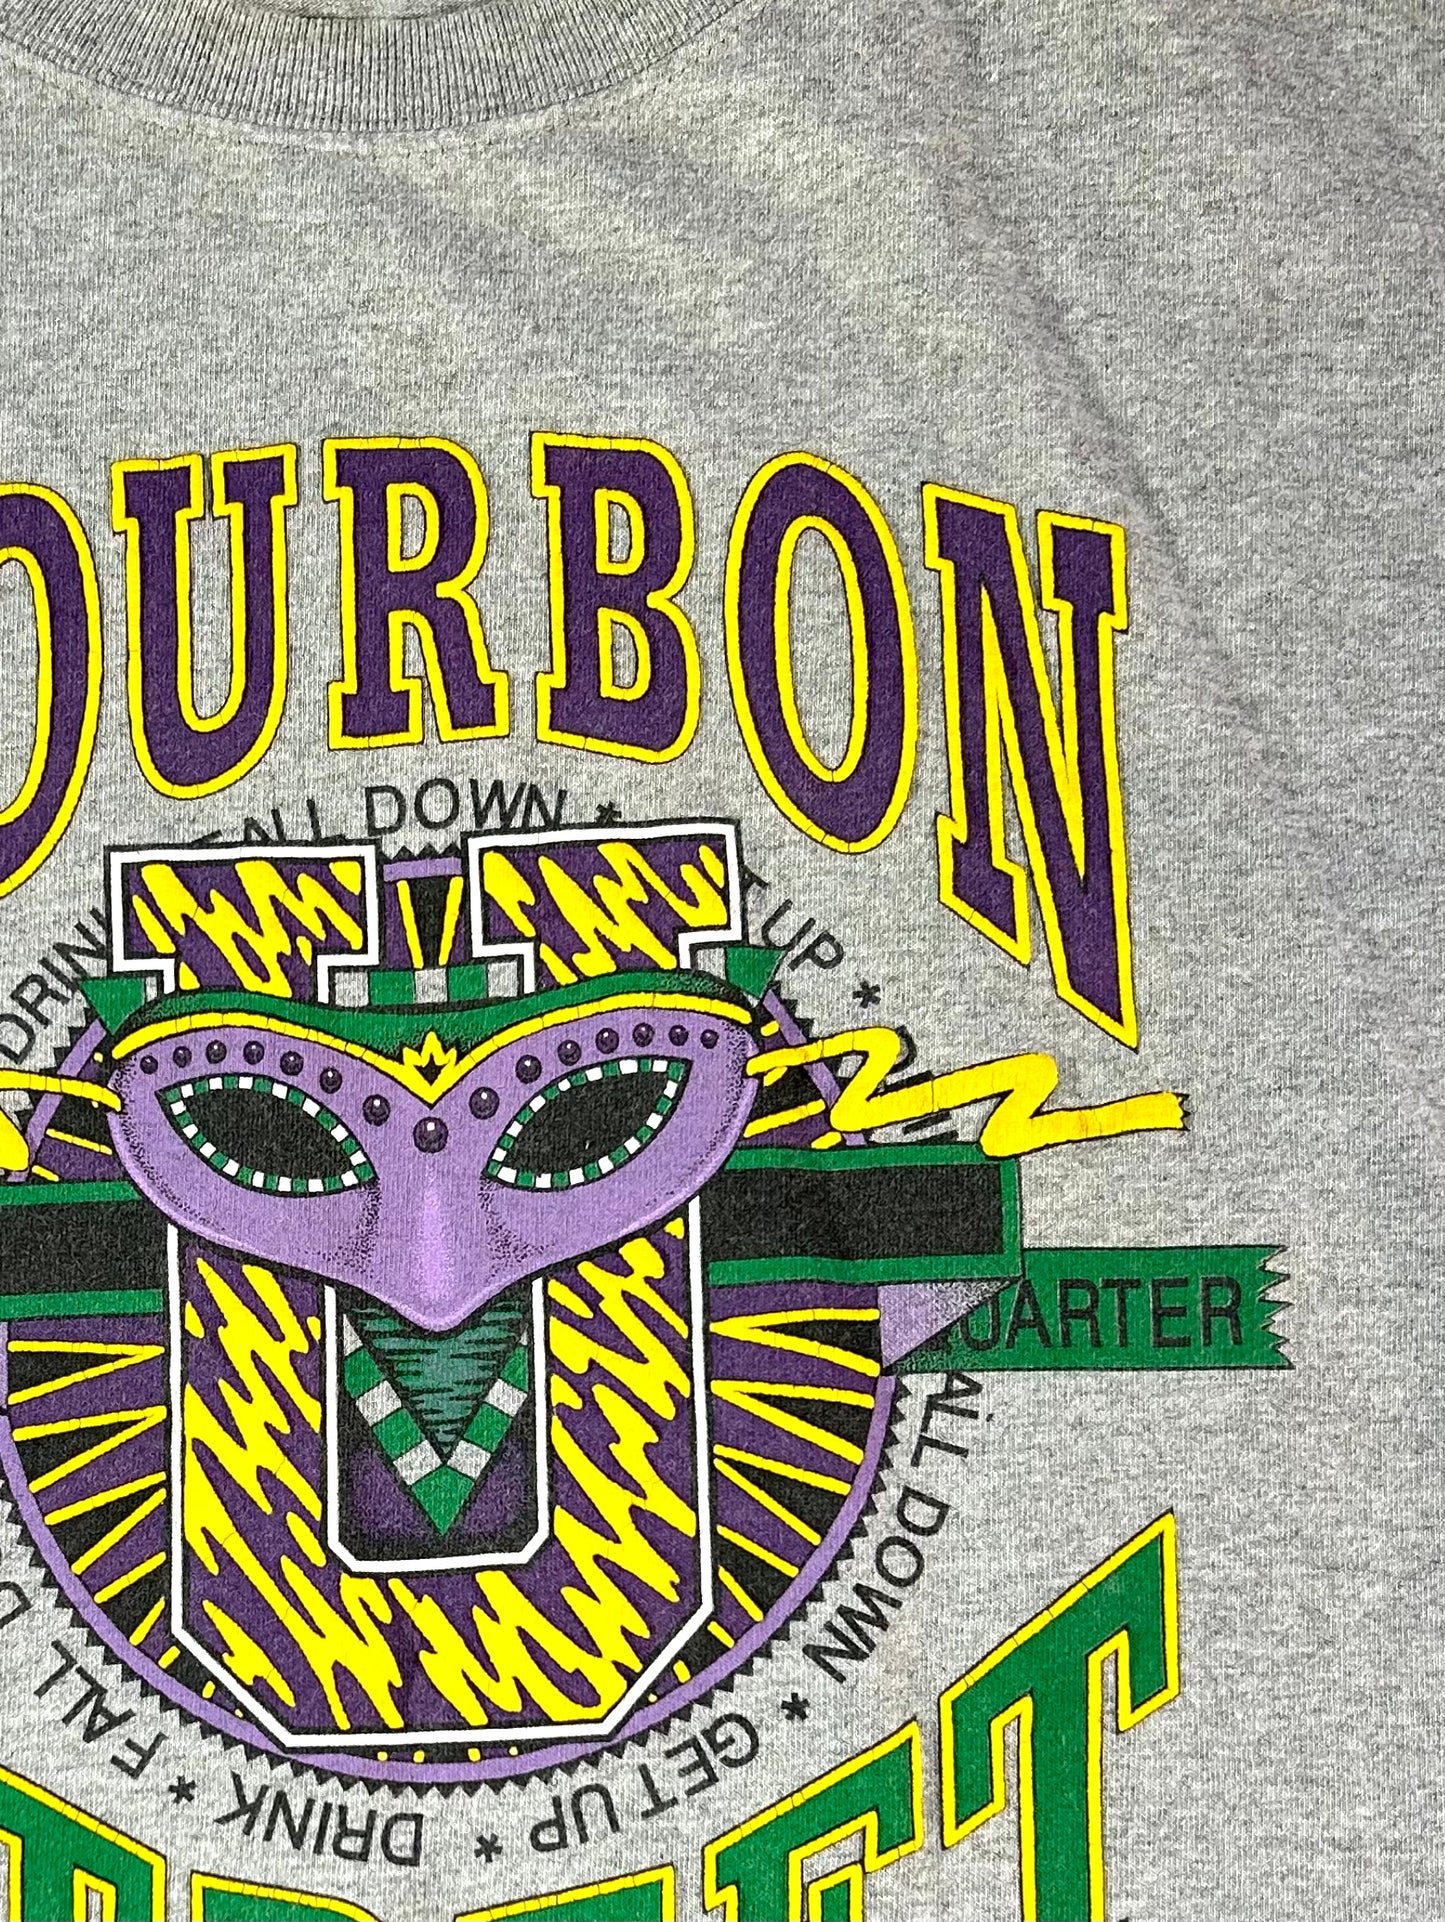 Vintage New Orleans T-Shirt Bourbon Street